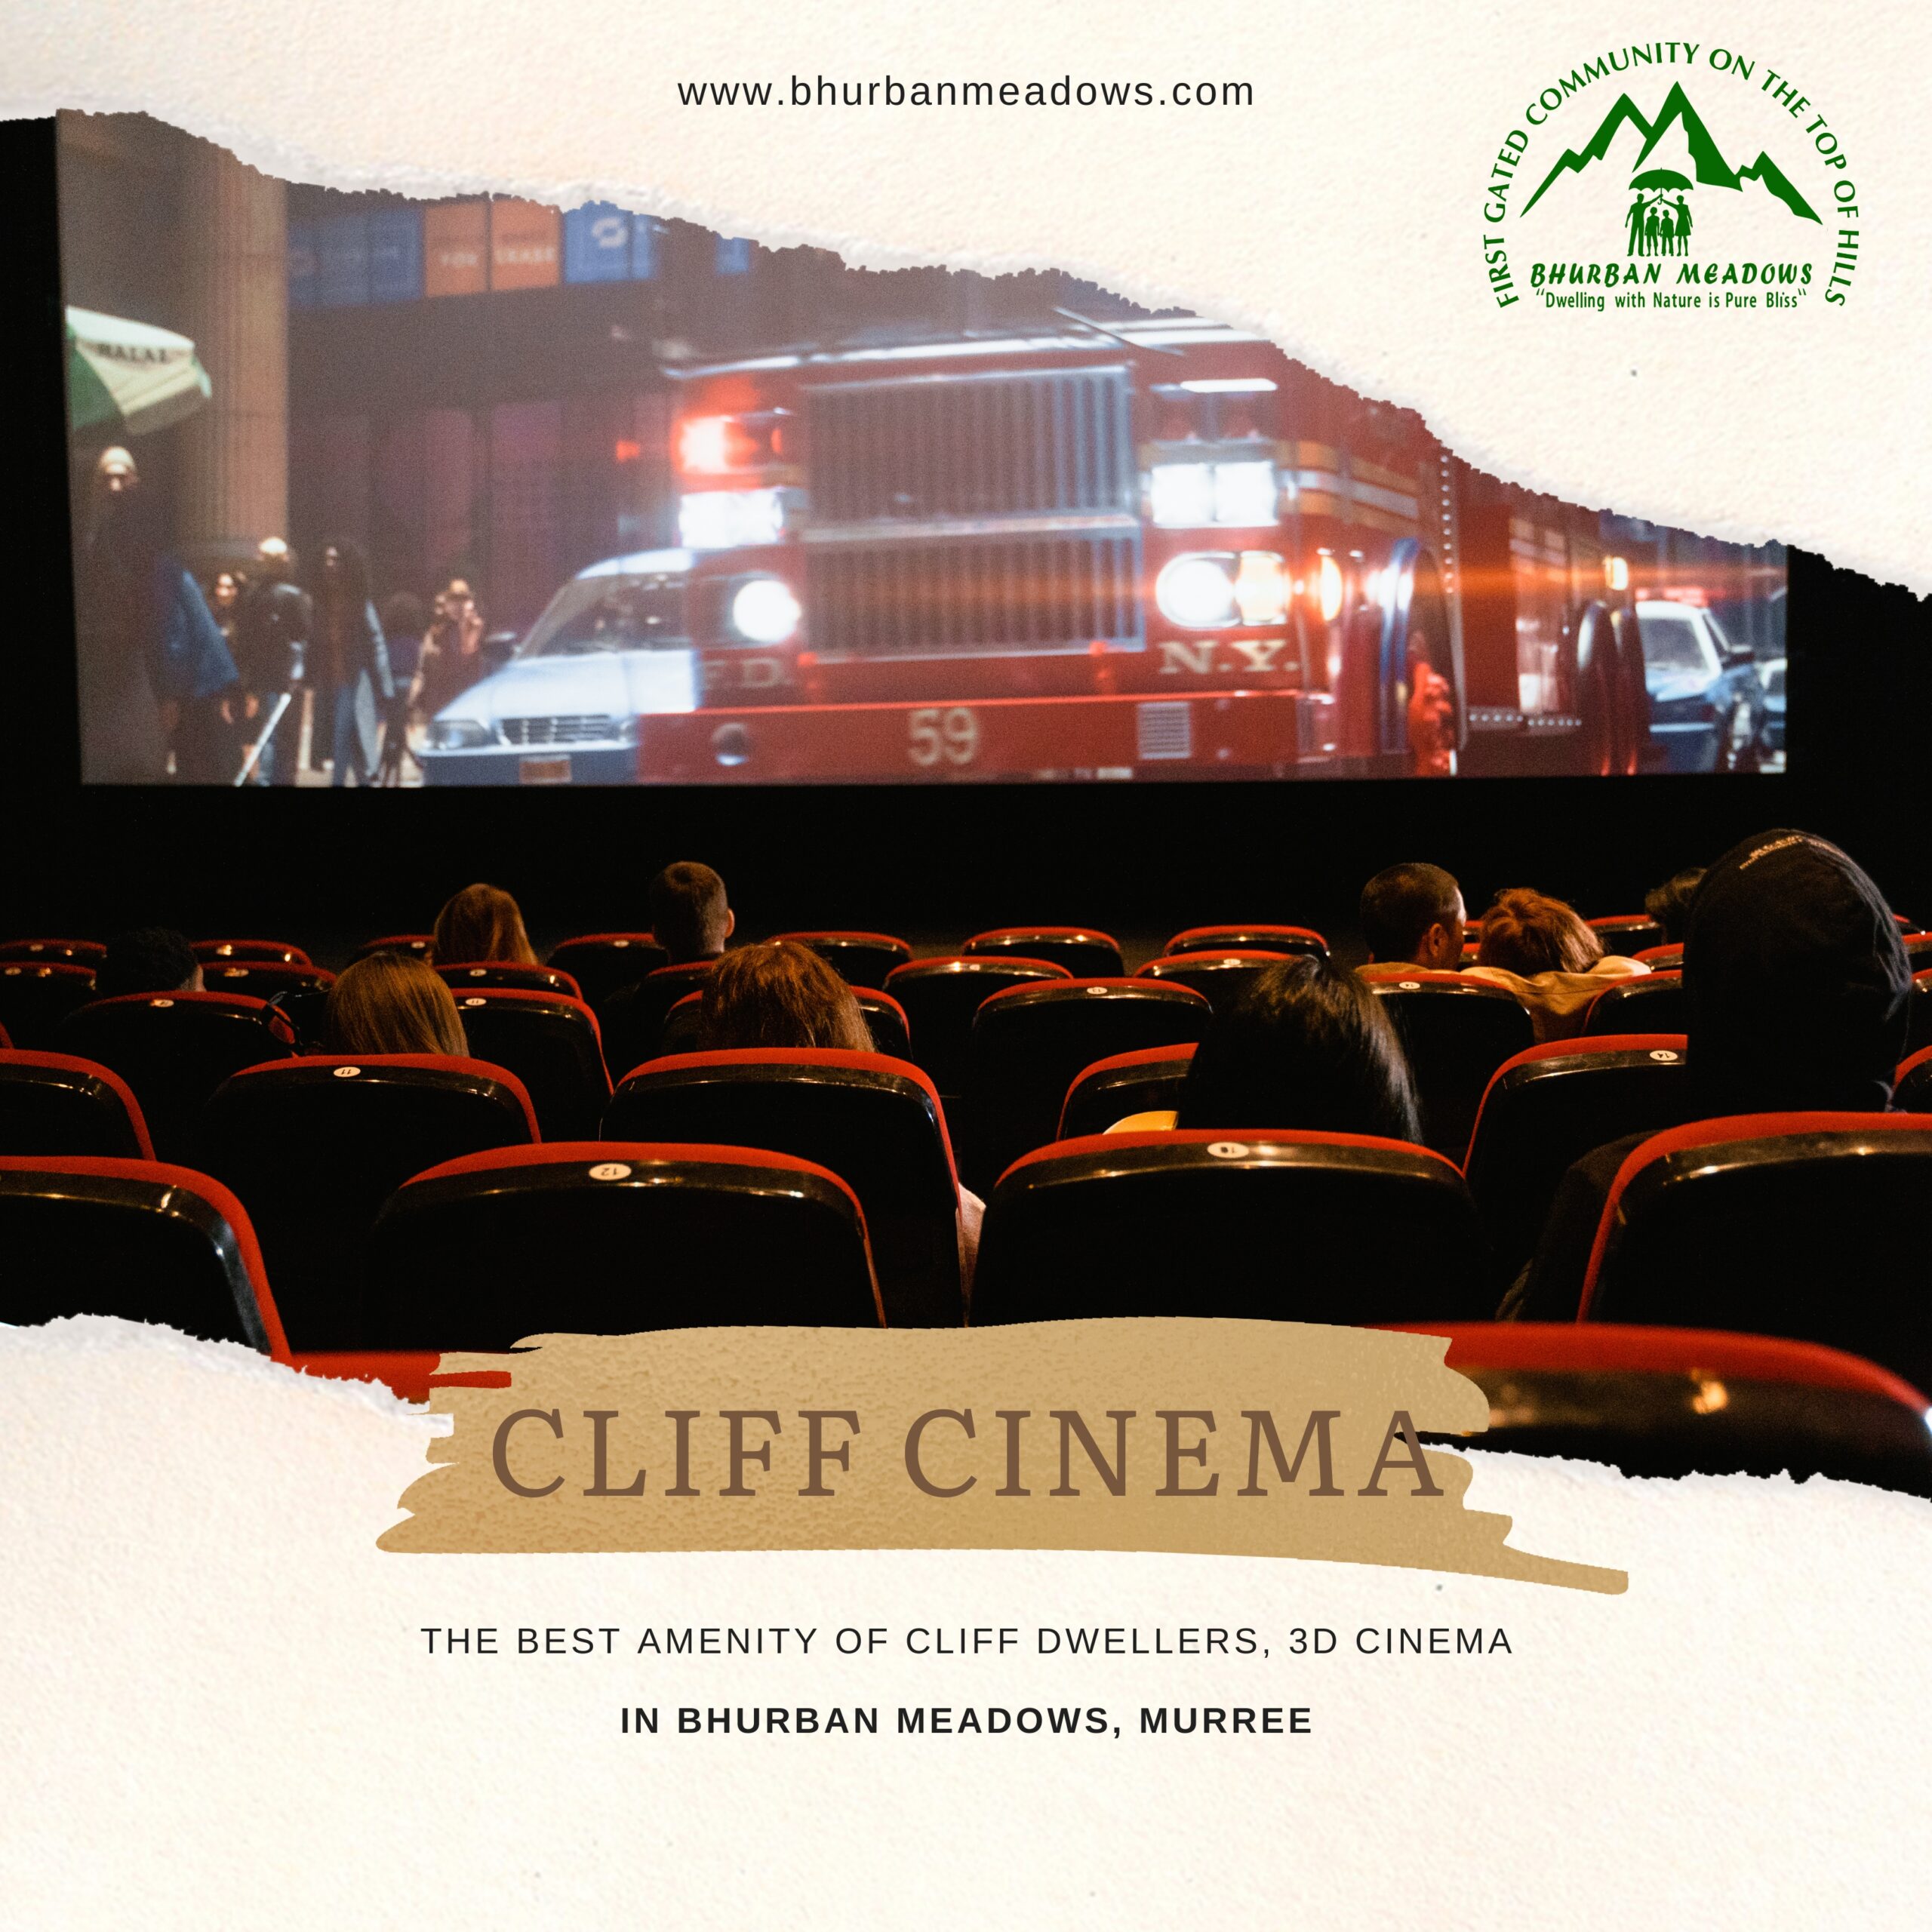 Why Bhurban Meadows & Cinema of Cliff Dwellers.